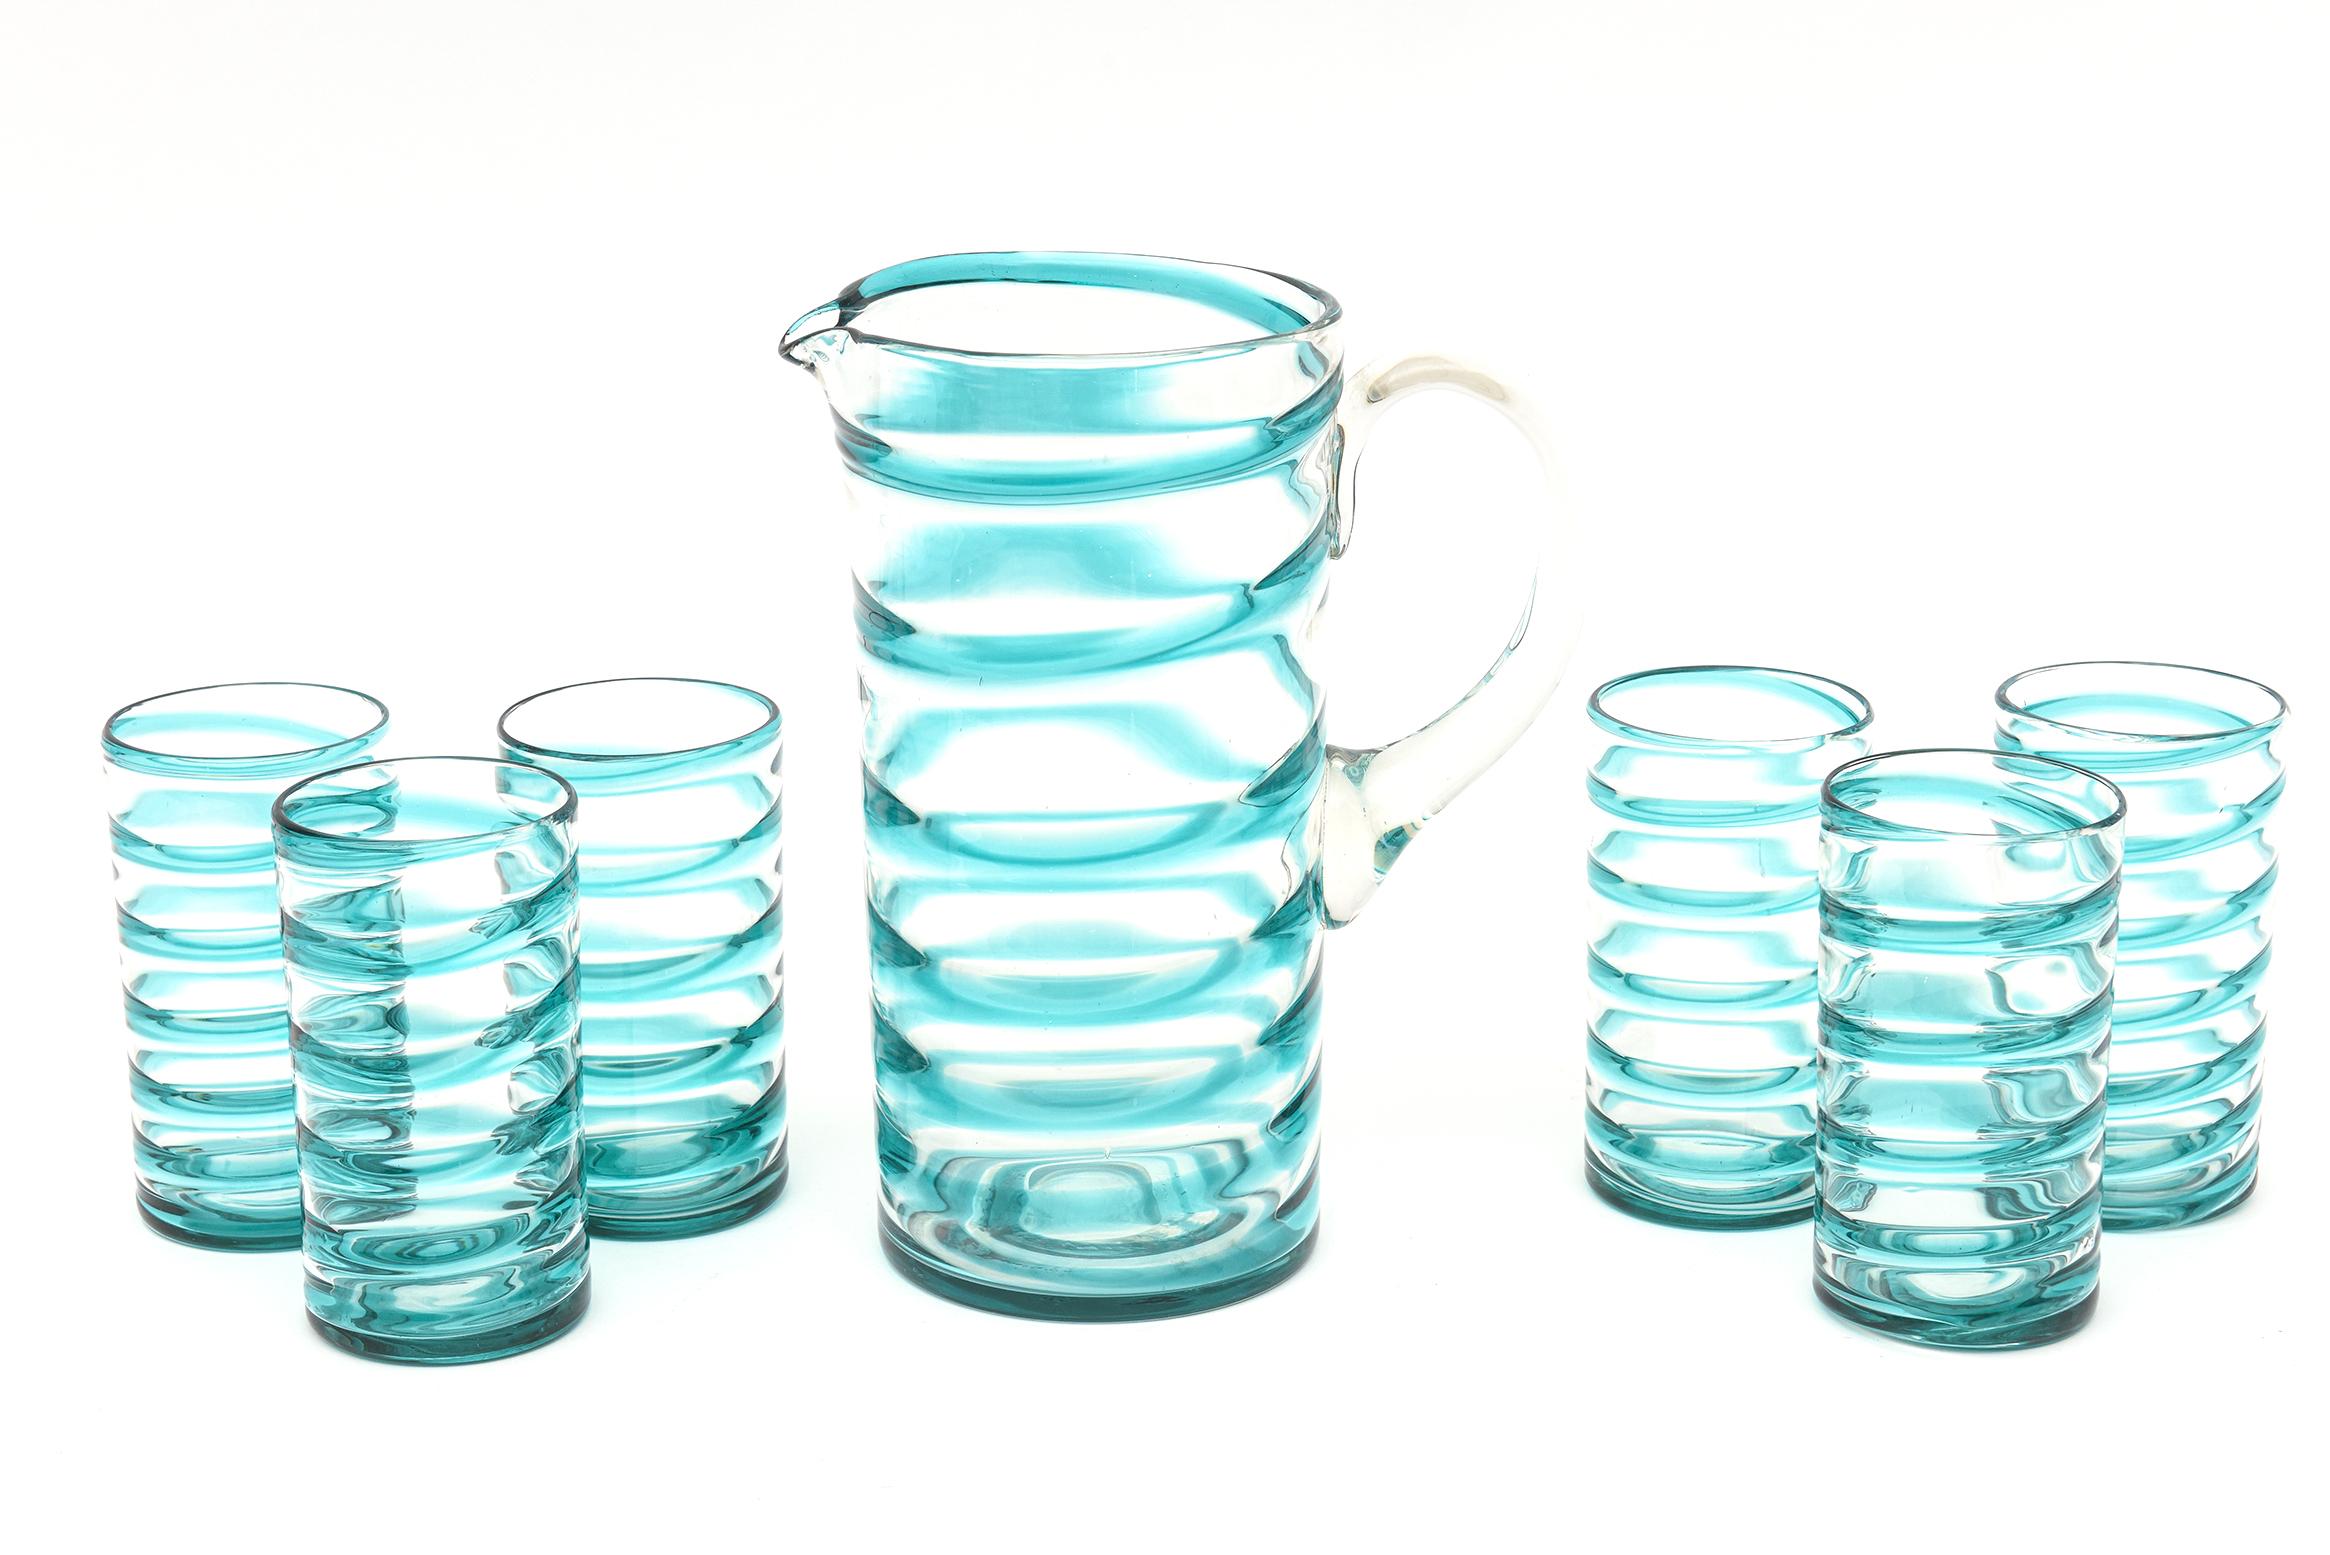 Murano Venini Turquoise Glass Swirled Ice Tea Or Lemonade Pitcher & Glasses Set For Sale 4